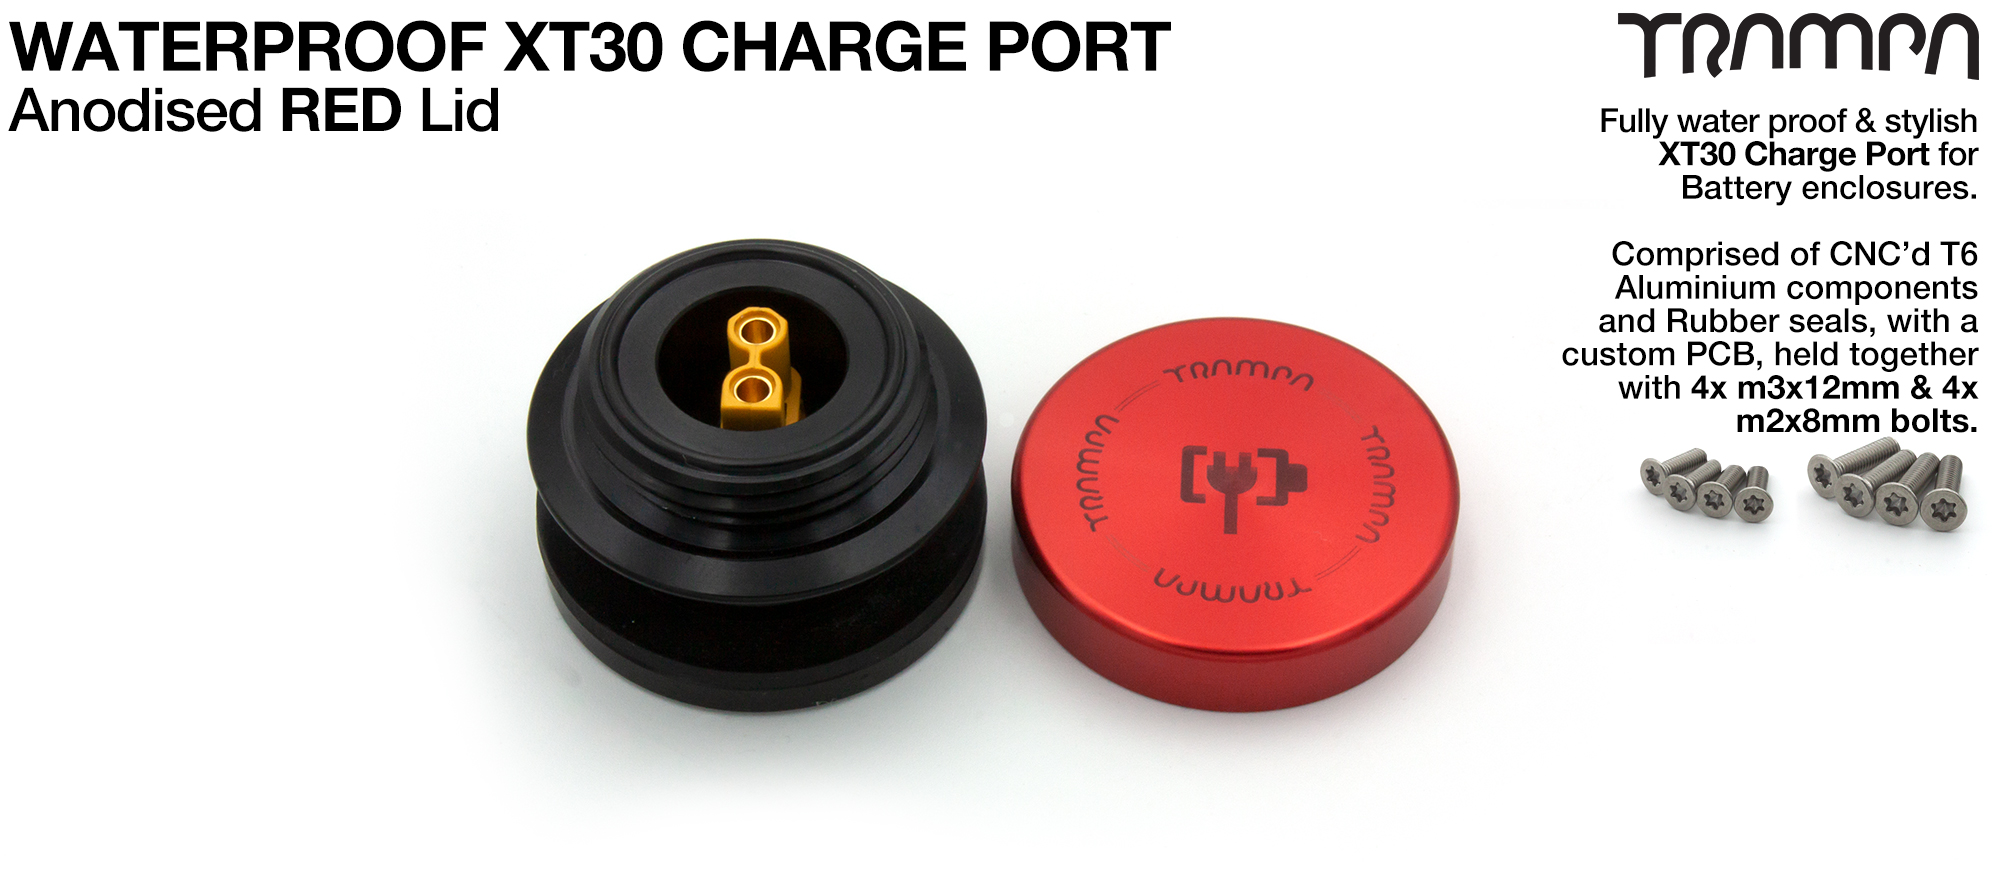 ORRSOM GT XT30 WATERPROOF Charge Port - RED